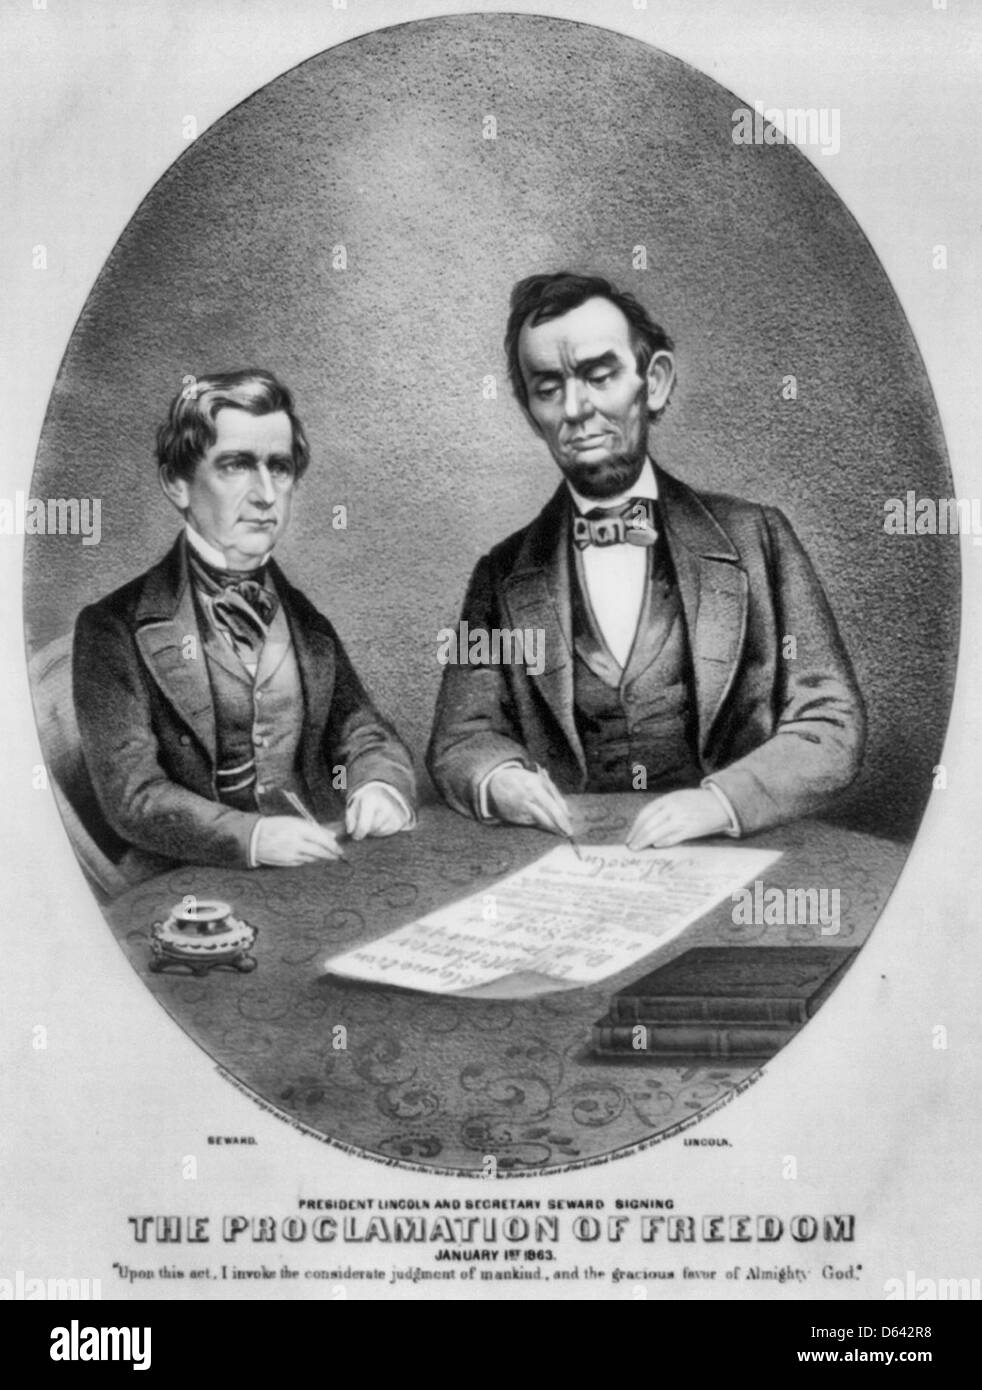 President Lincoln and Secretary Seward signing the Proclamation of Freedom: January 1st, 1863 Stock Photo